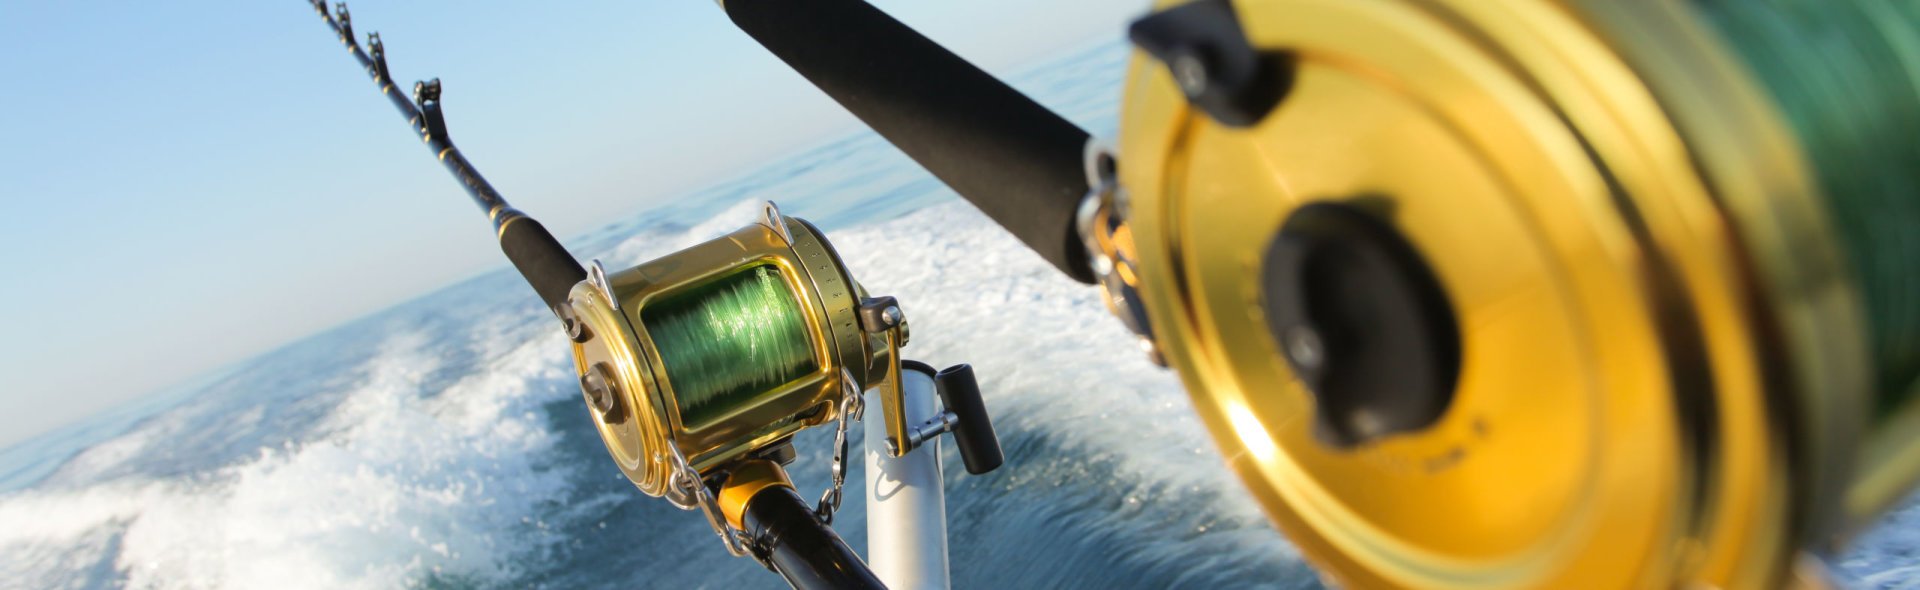 Shutterstock 95447302 big game fishing reels.